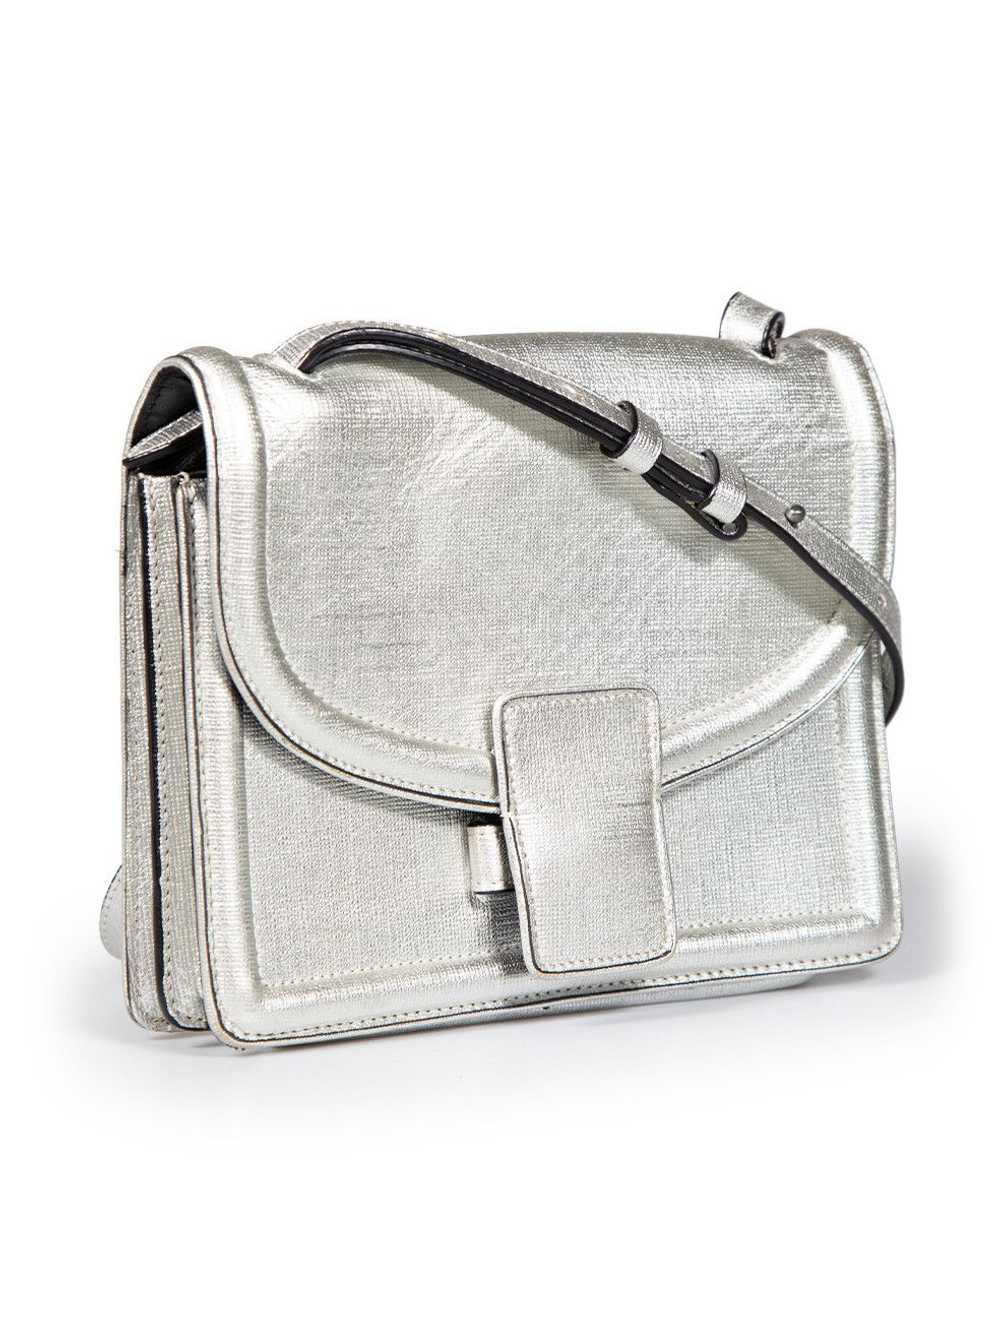 Dries Van Noten Silver Leather Flap Crossbody Bag - image 2